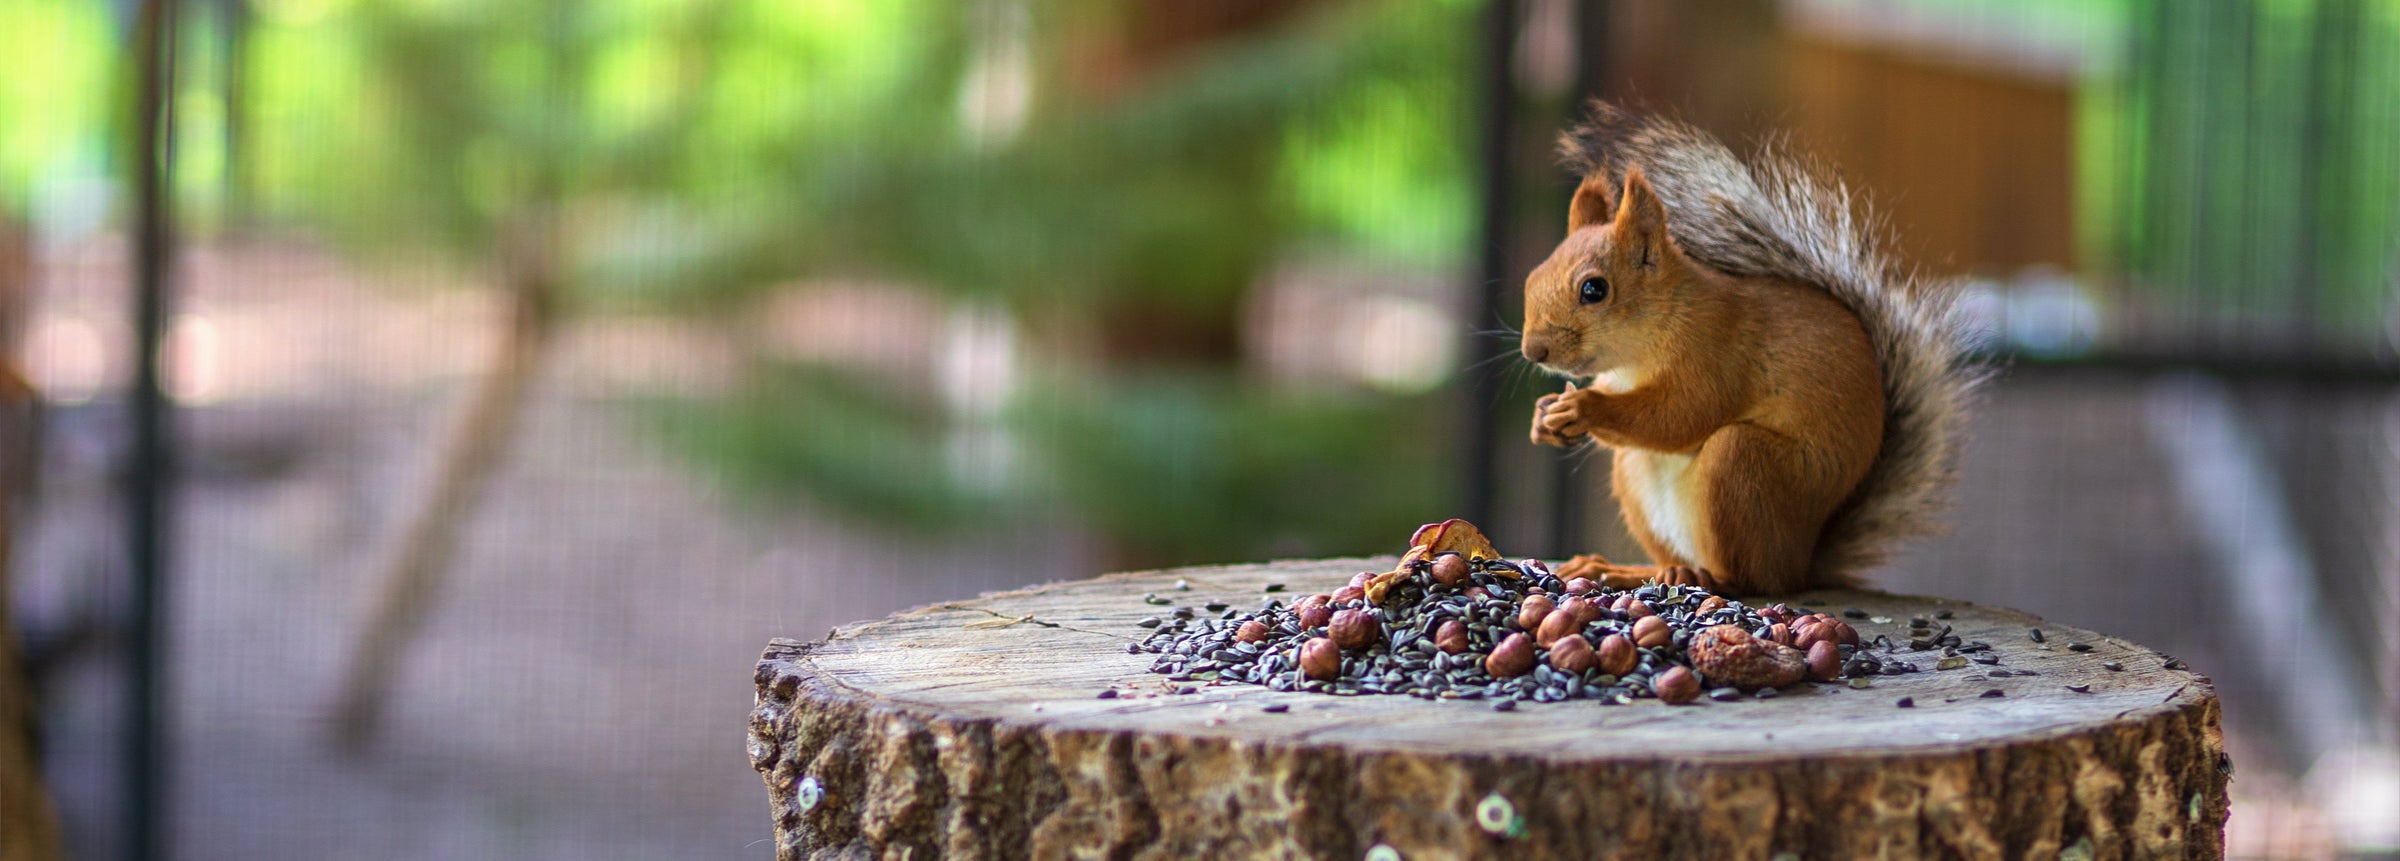 Squirrel Feeders